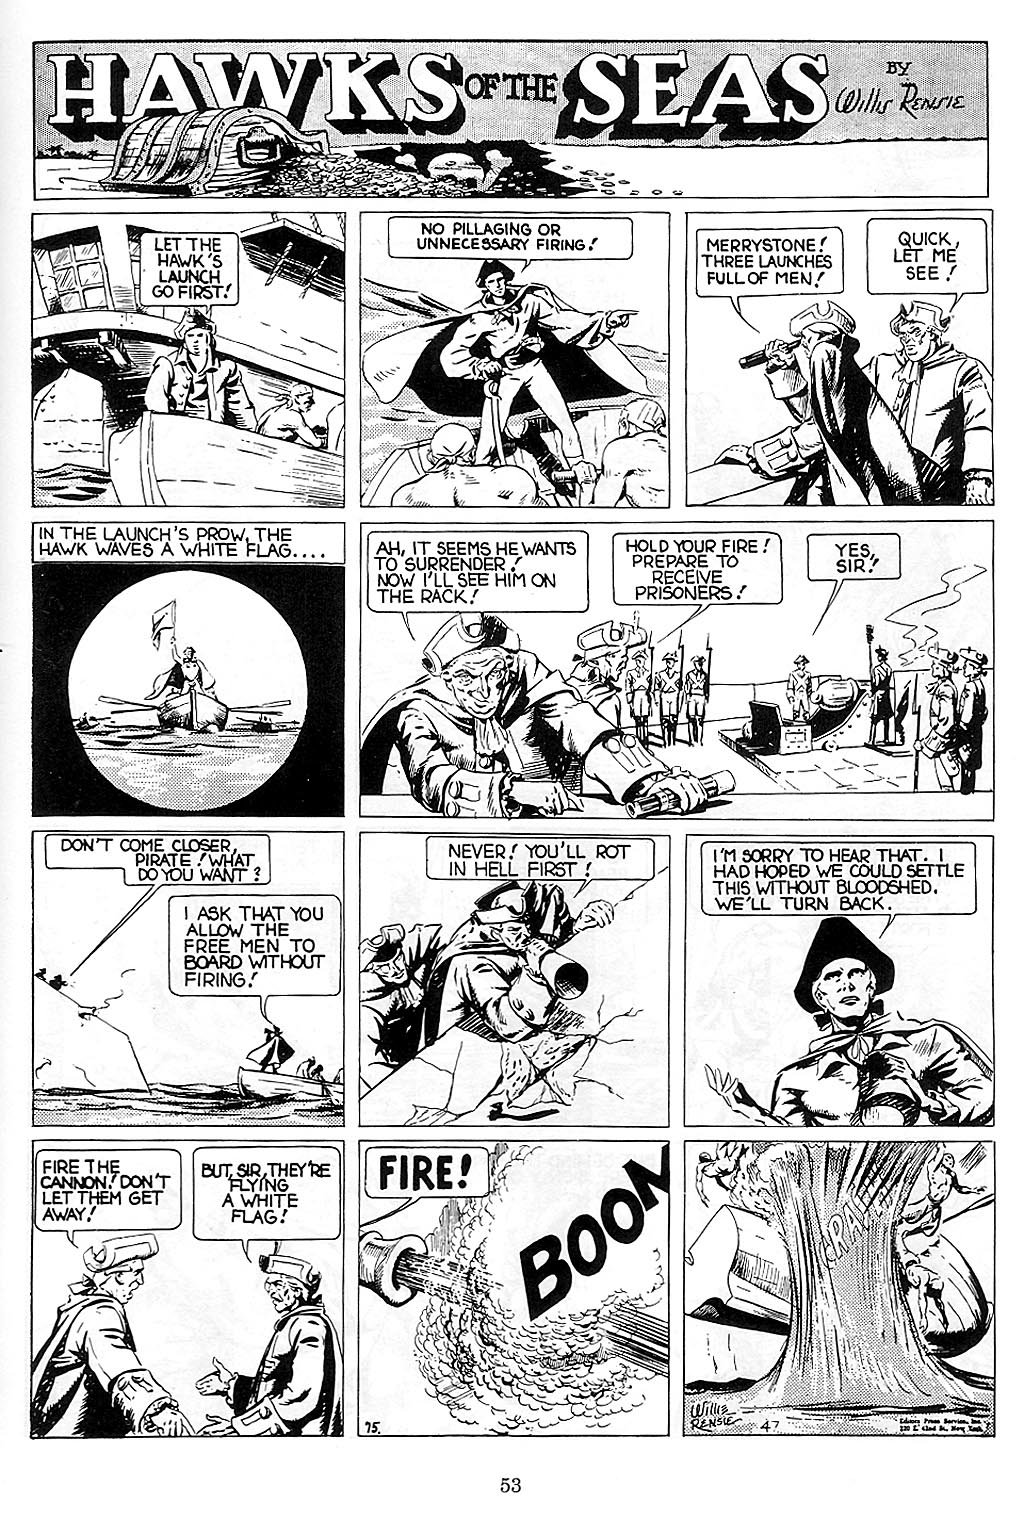 Read online Will Eisner's Hawks of the Seas comic -  Issue # TPB - 54